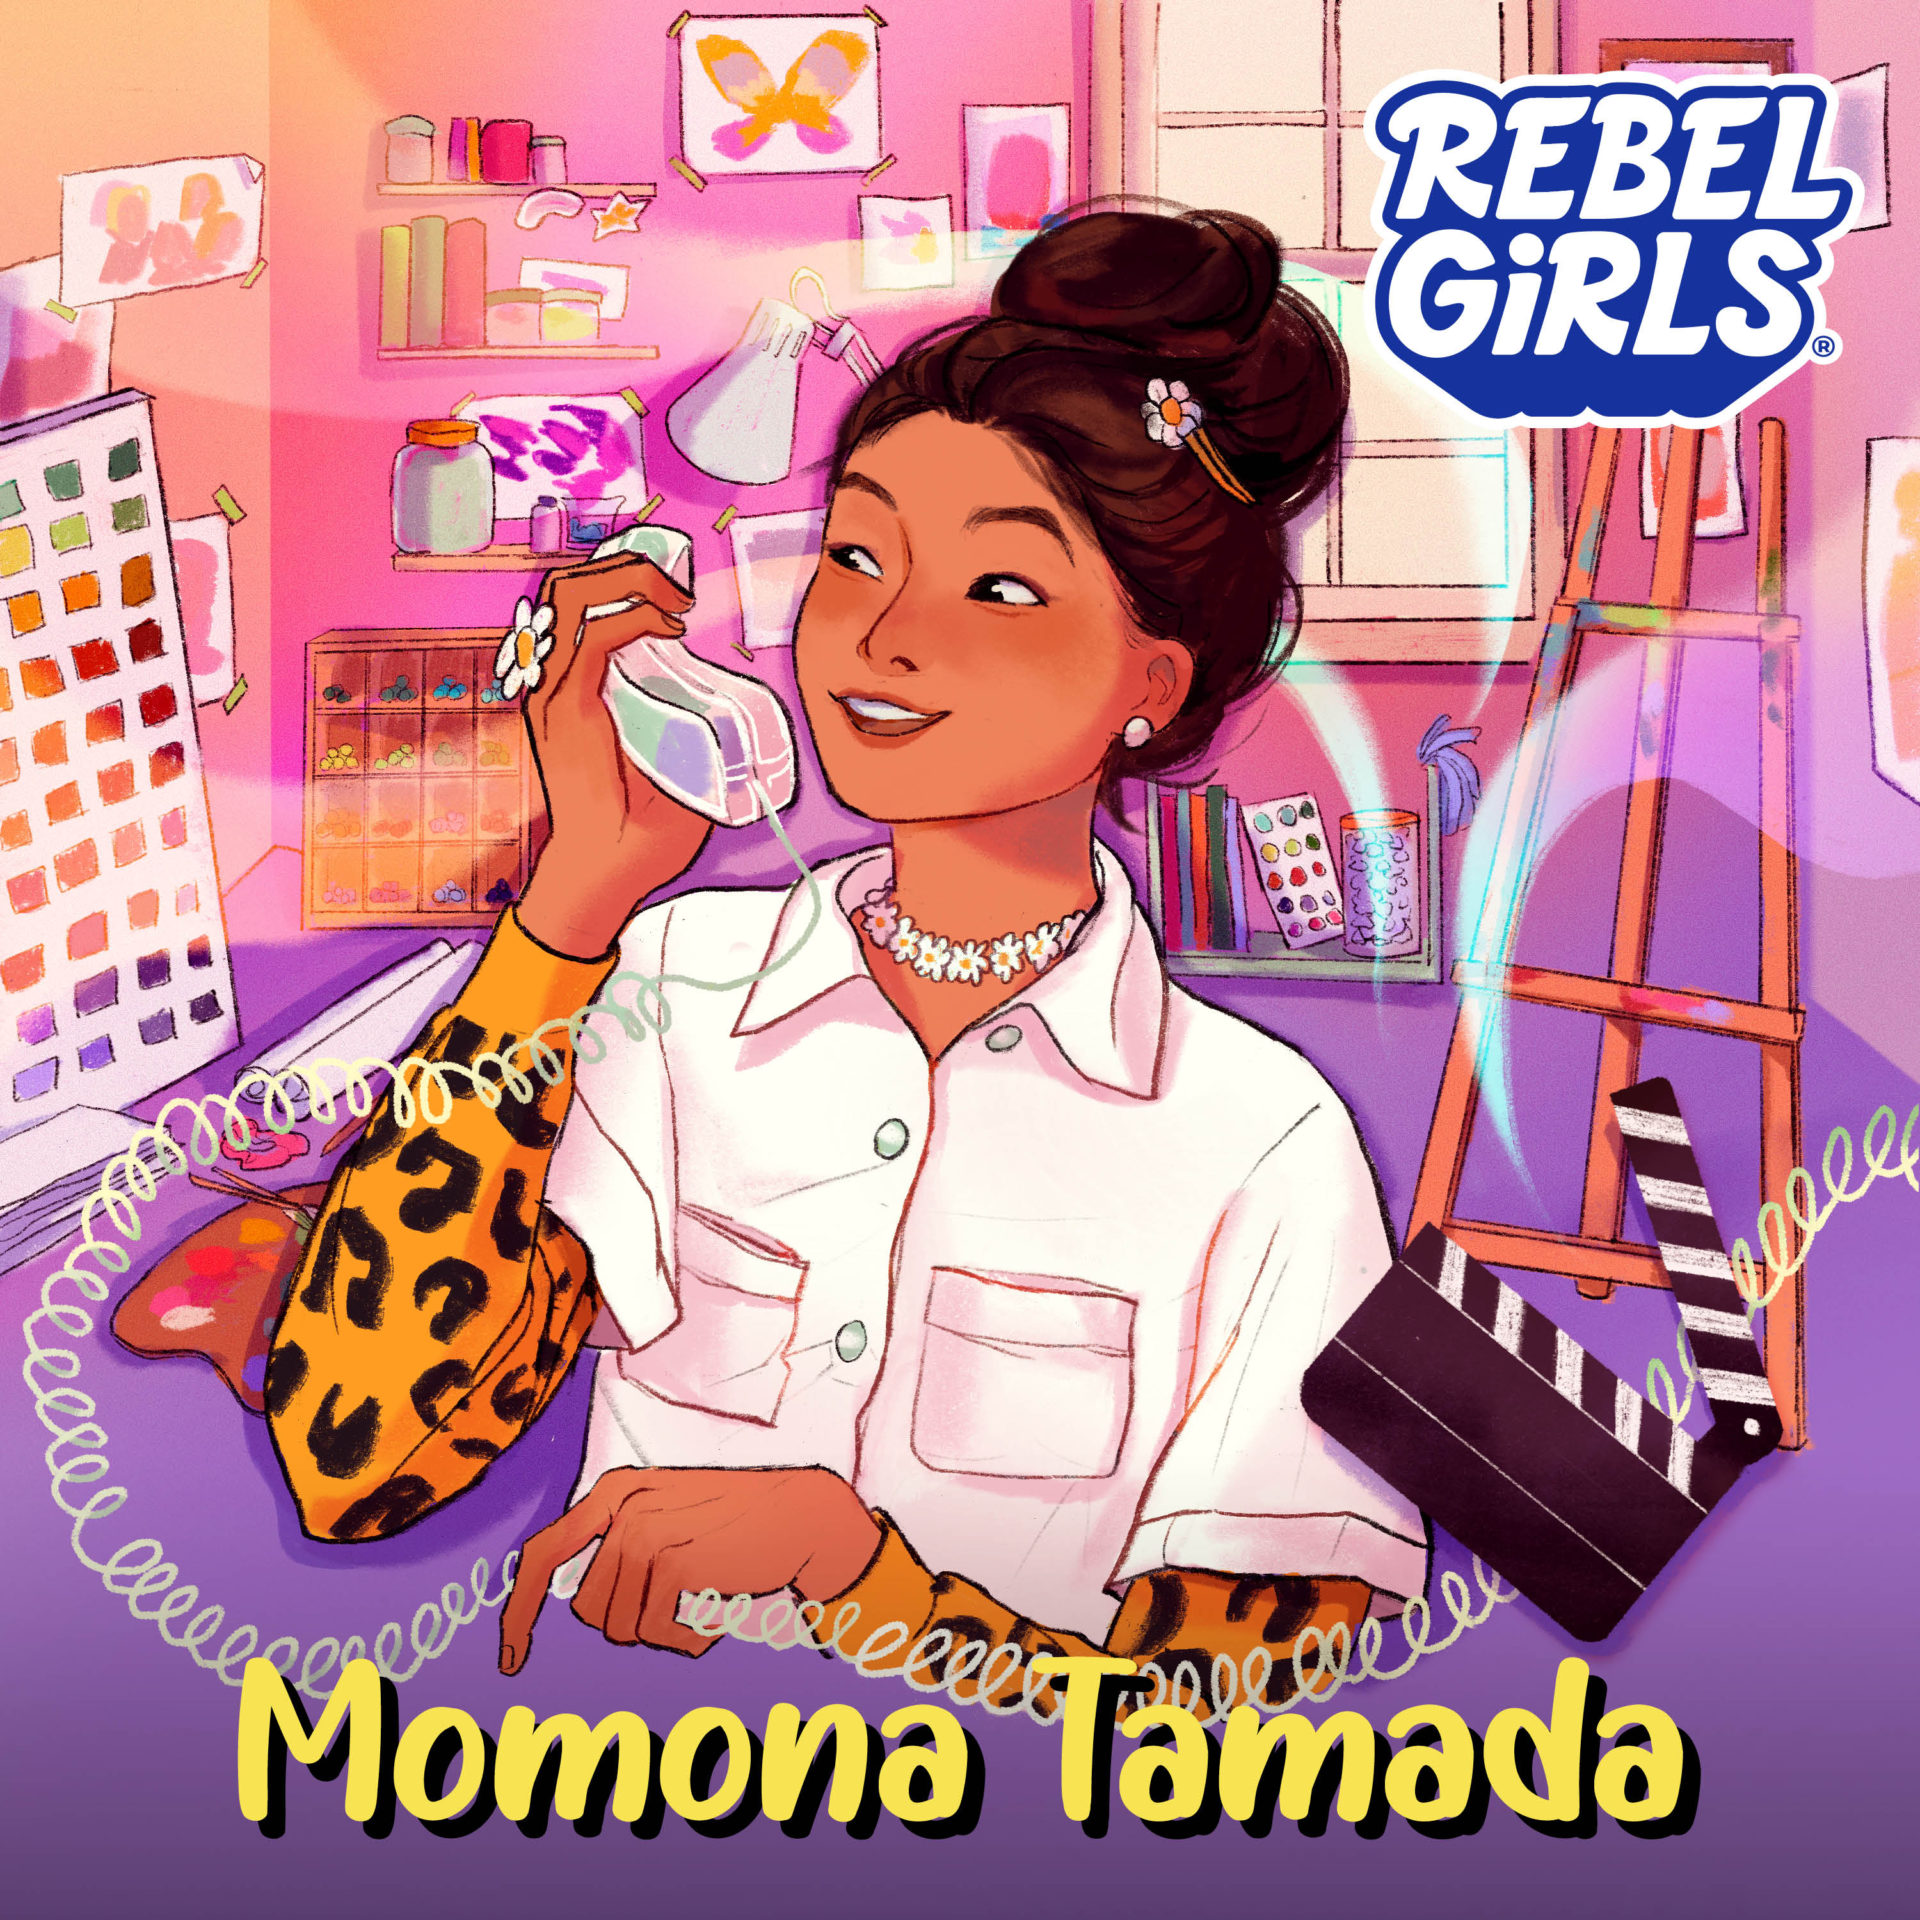 Momona Tamada Read by Malia Baker - Rebel Girls